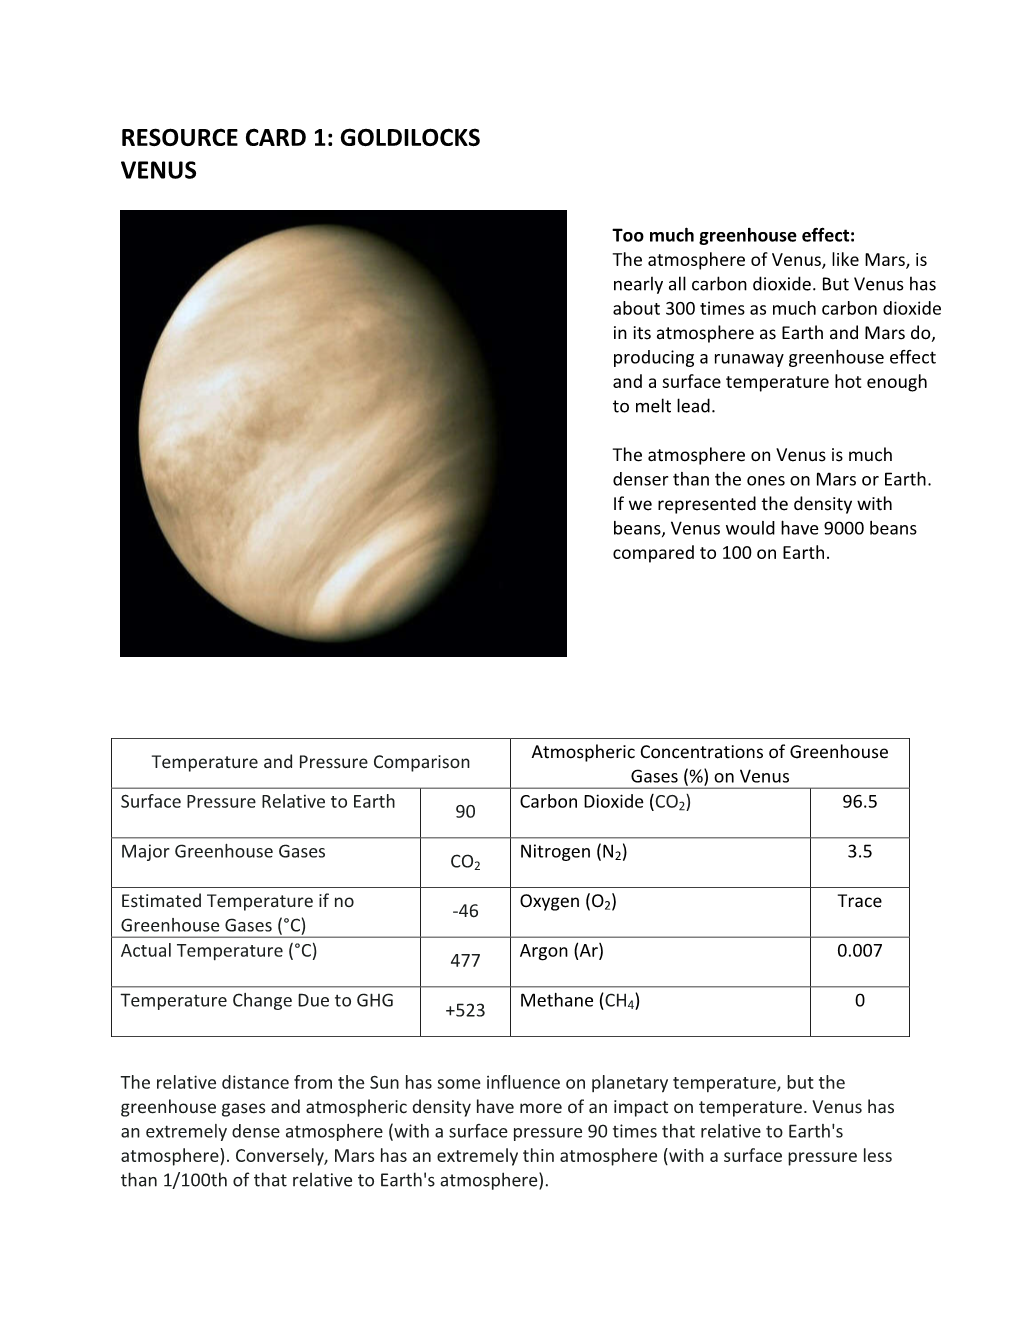 Resource Card 1: Goldilocks Venus